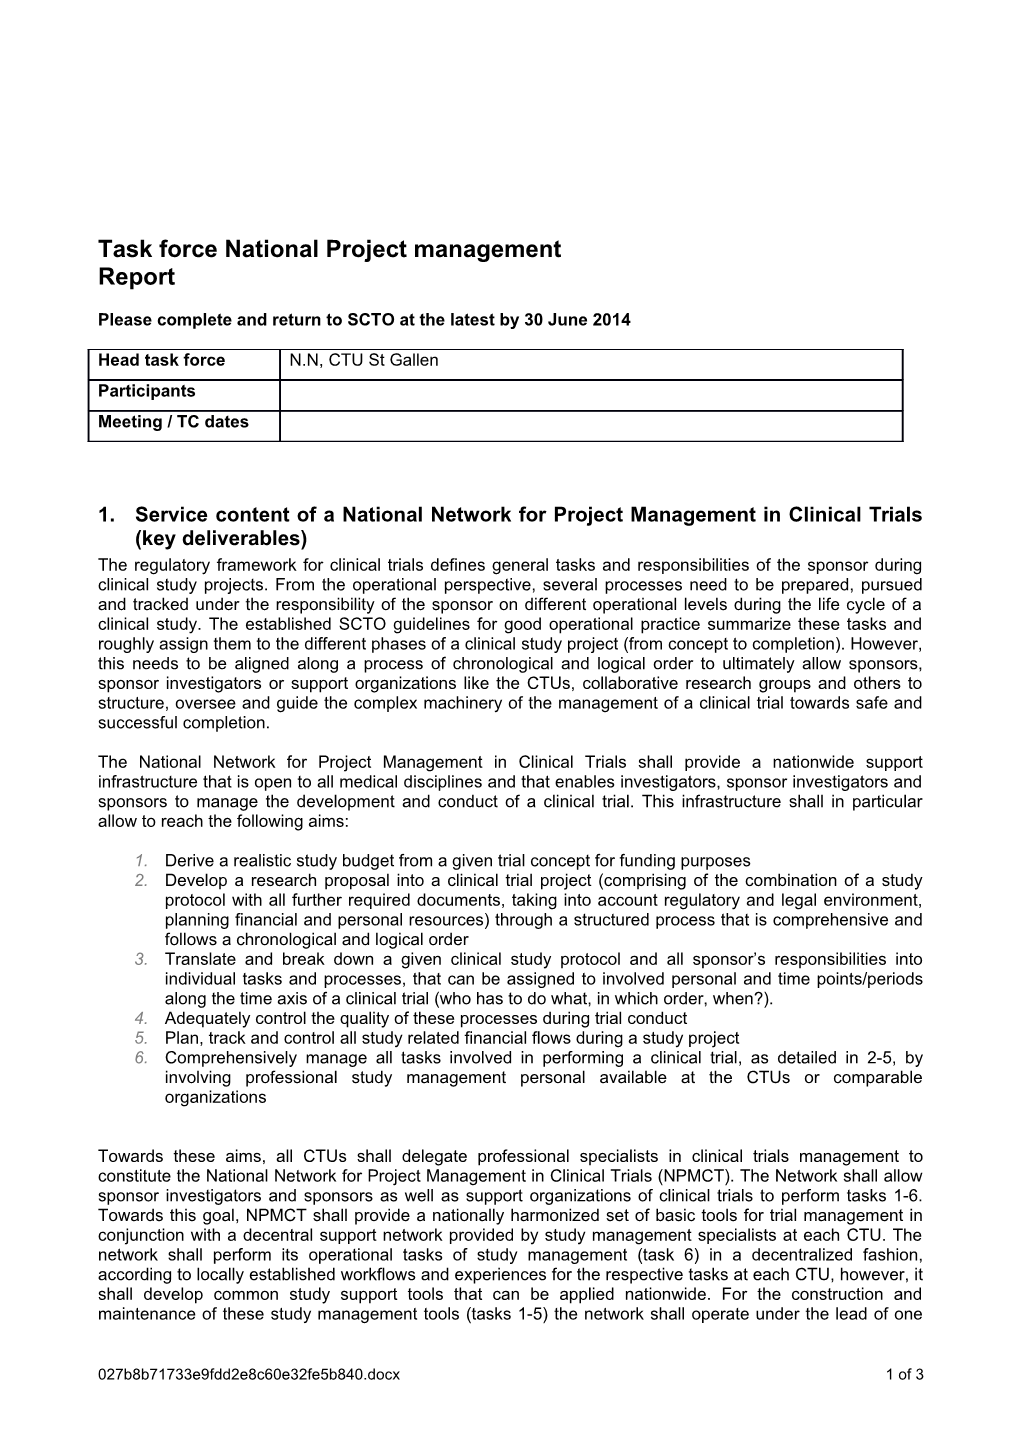 Task Force National Project Management